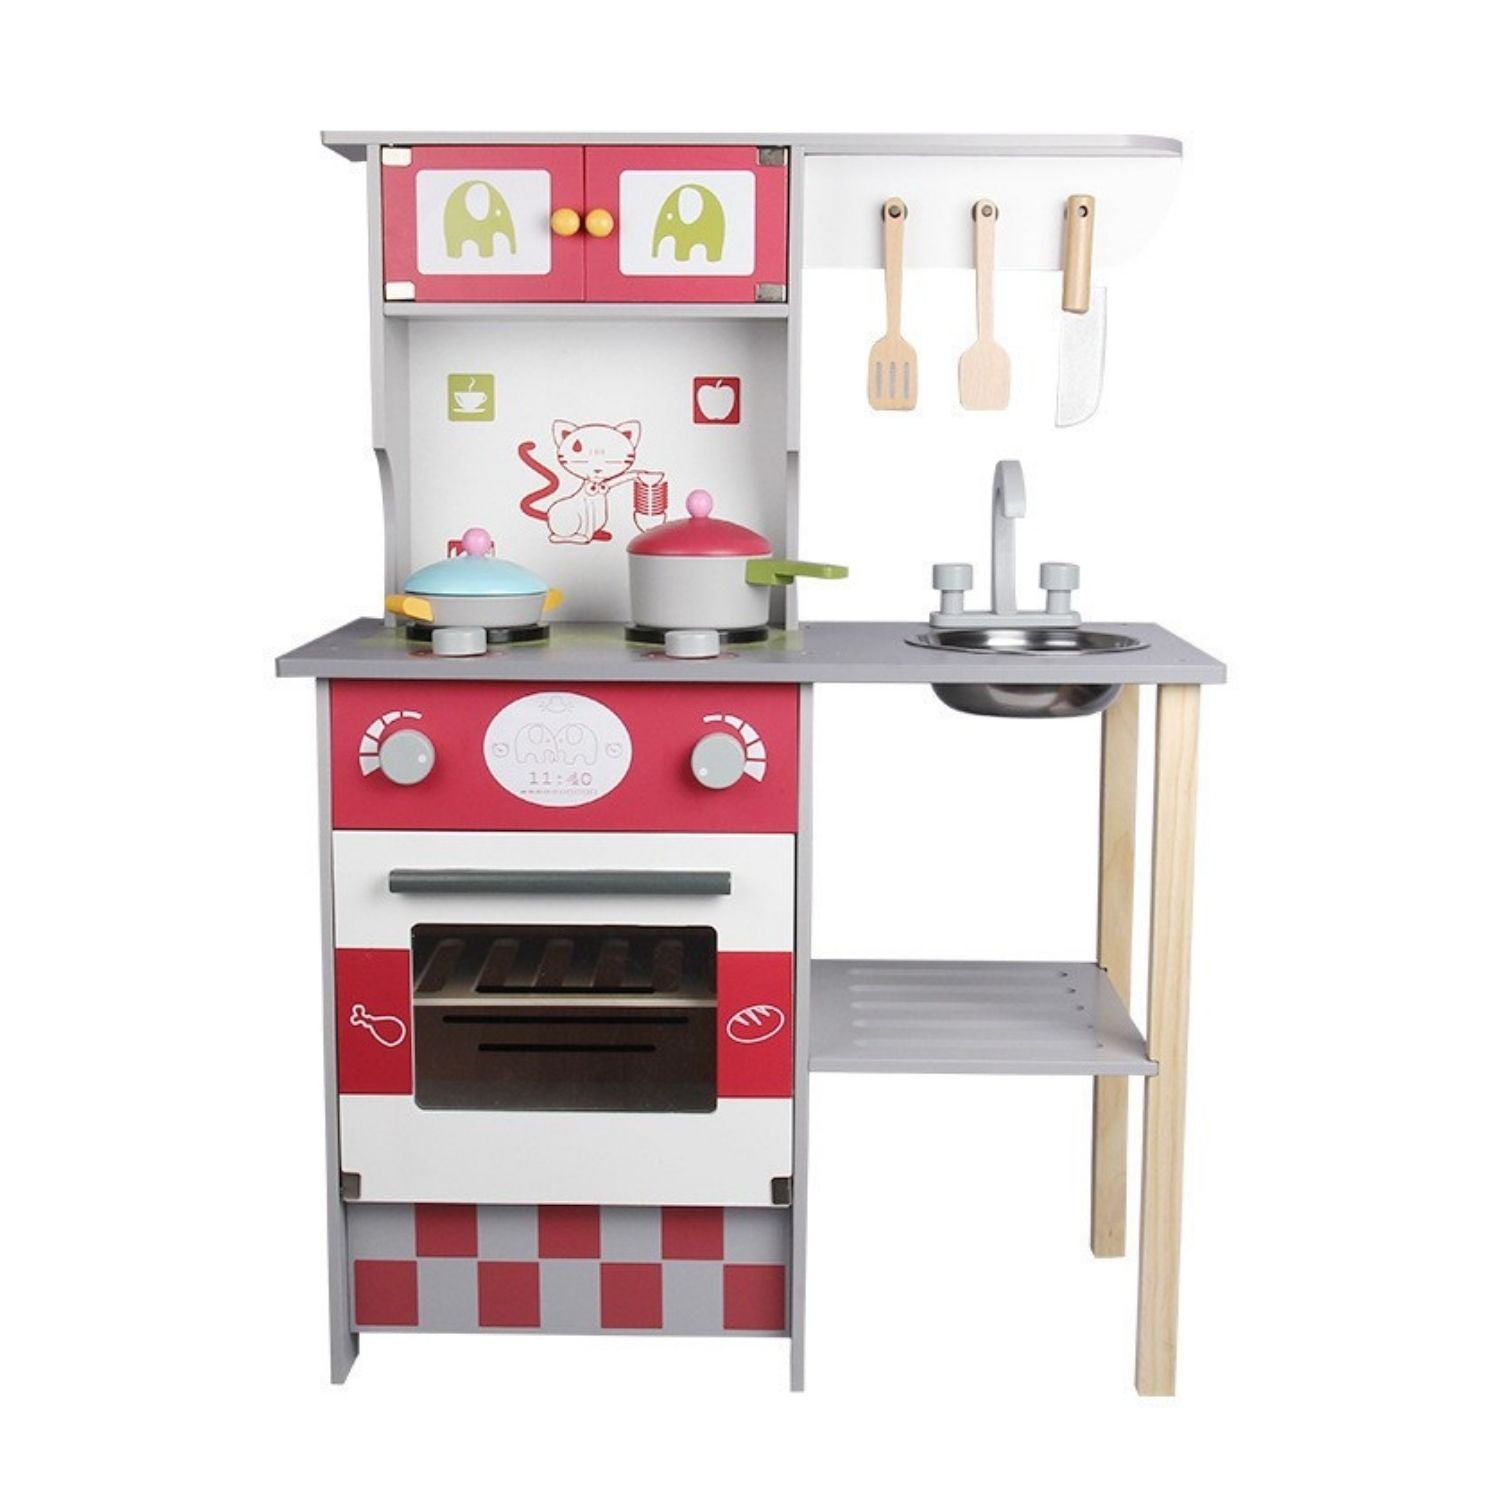 EKKIO Wooden Kitchen Playset for Kids (European Style Kitchen Set)